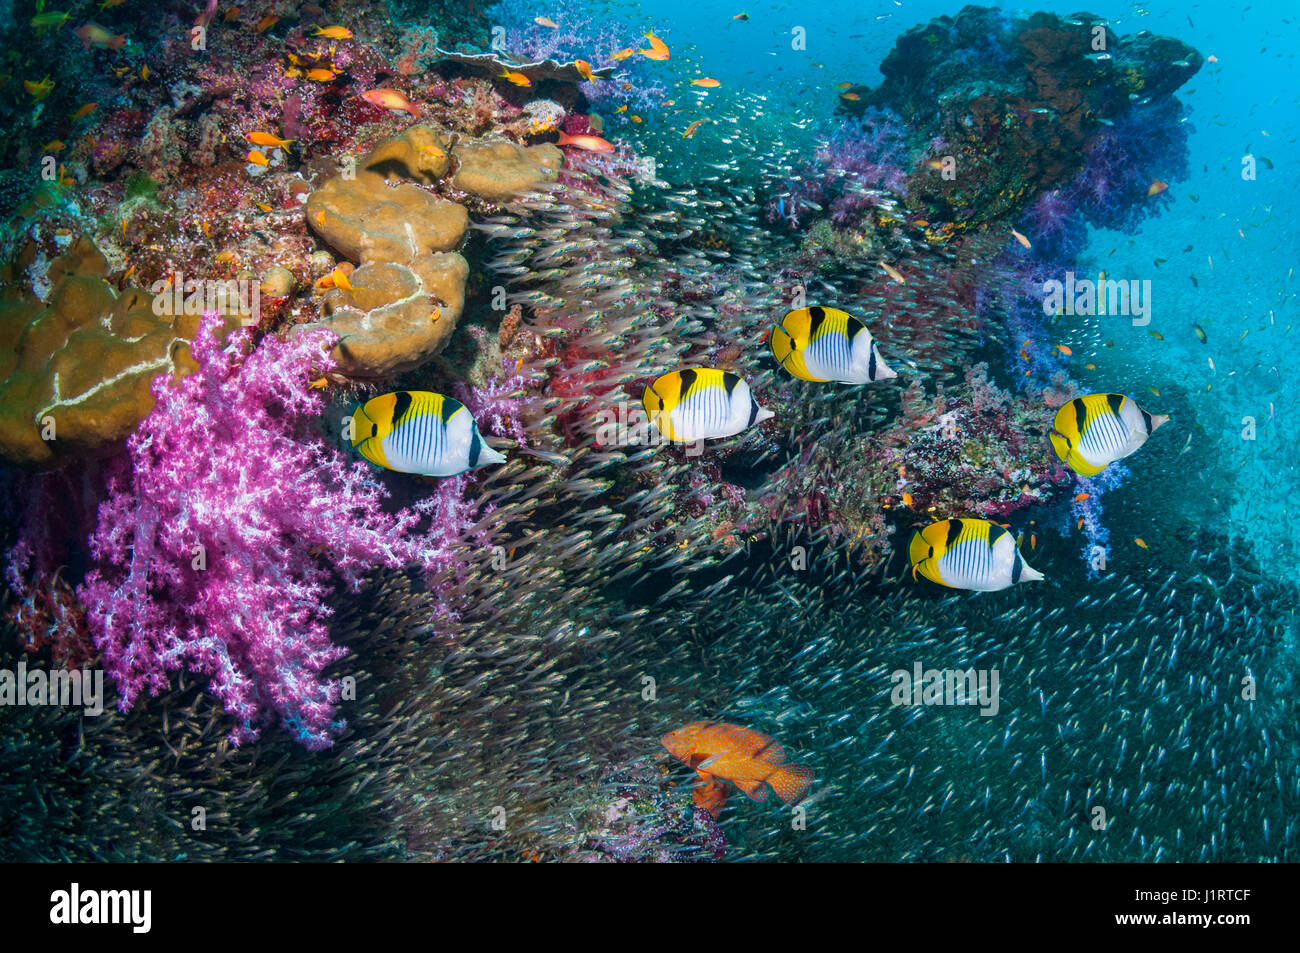 Coral reef paesaggi con a doppio spiovente o Blackwedge butterflyfish Foto Stock